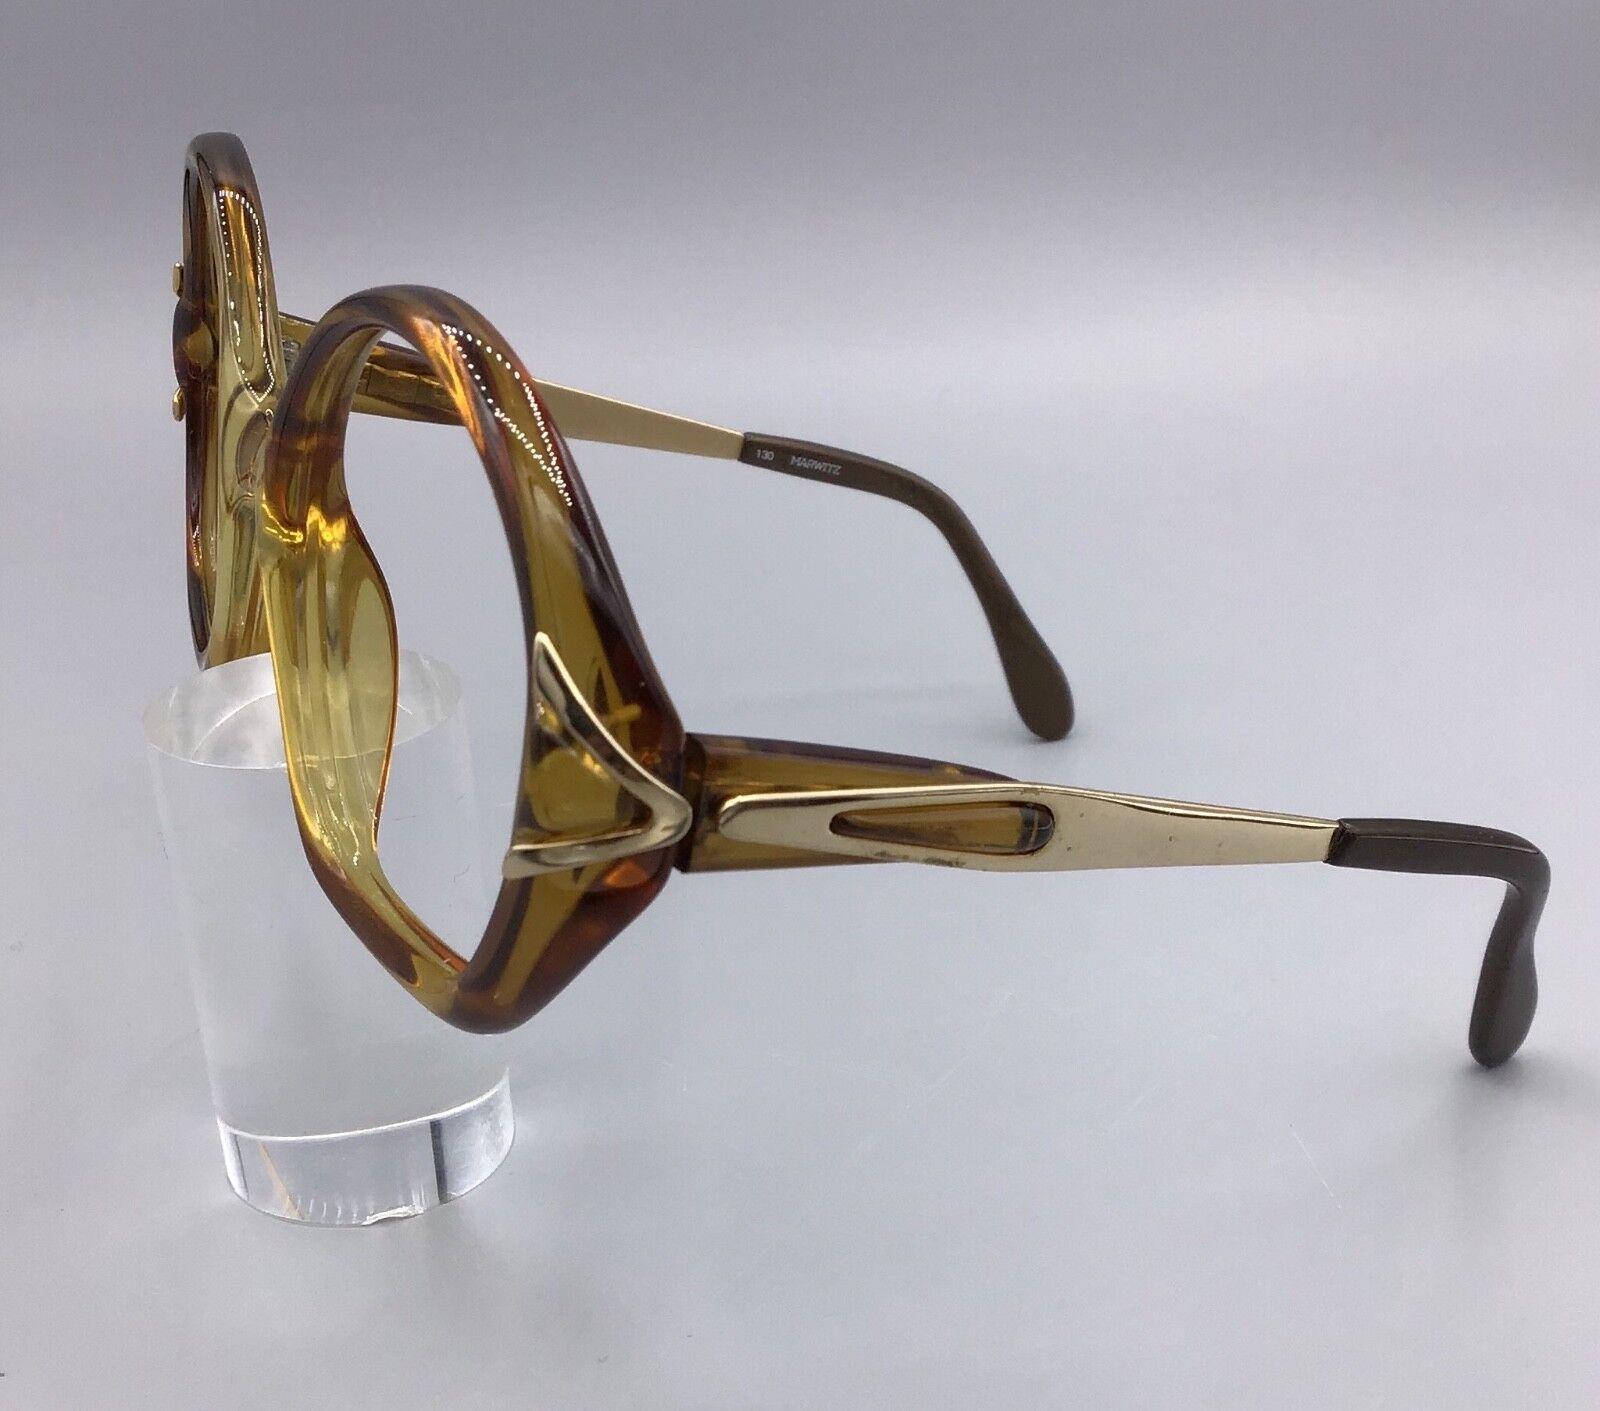 Marwitz occhiale vintage eyewear frame brillen lunettes gafas model 3028 338 AE4